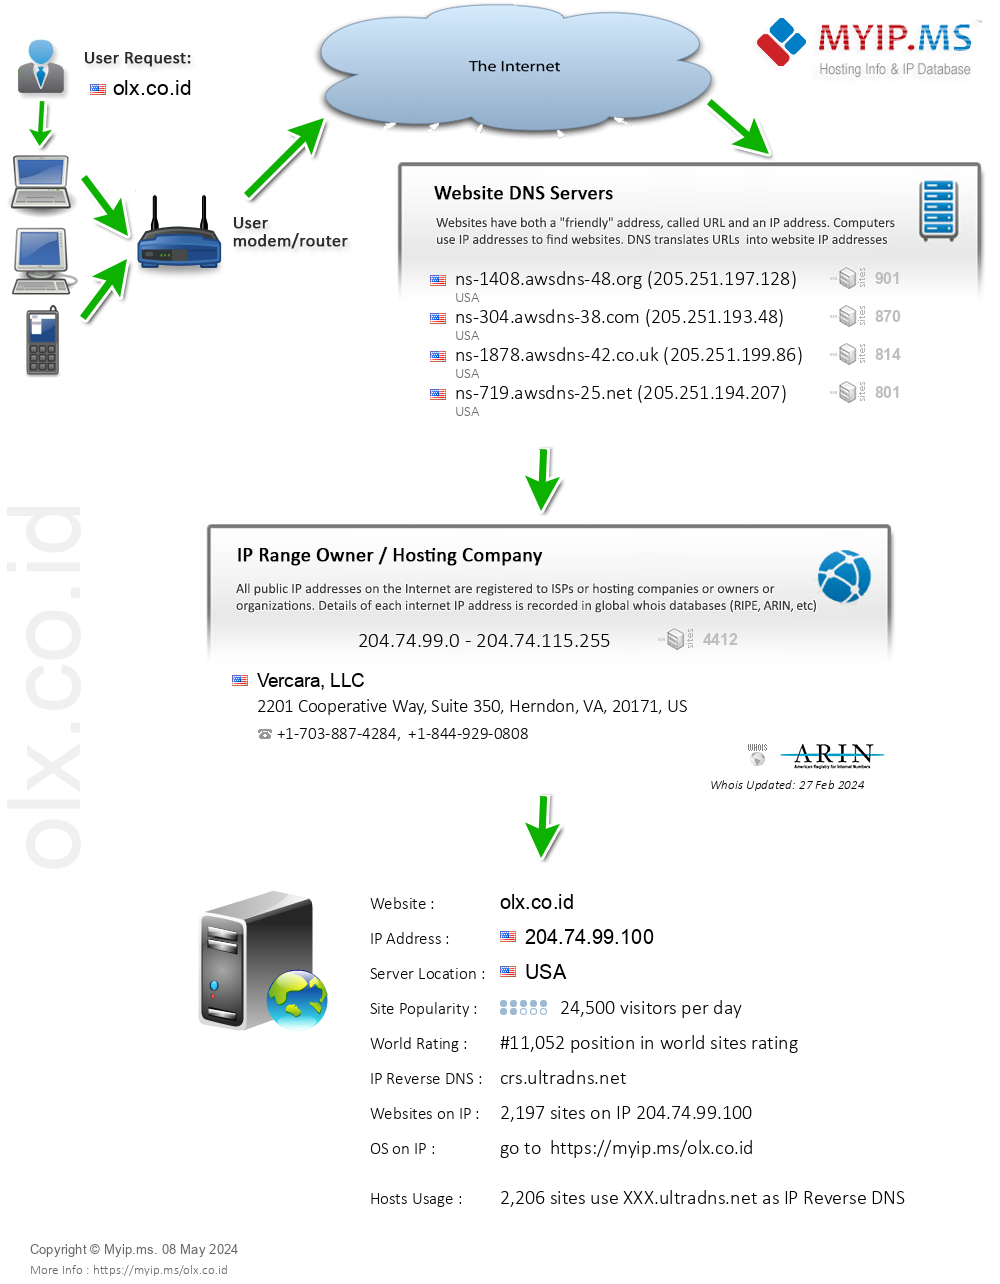 Olx.co.id - Website Hosting Visual IP Diagram